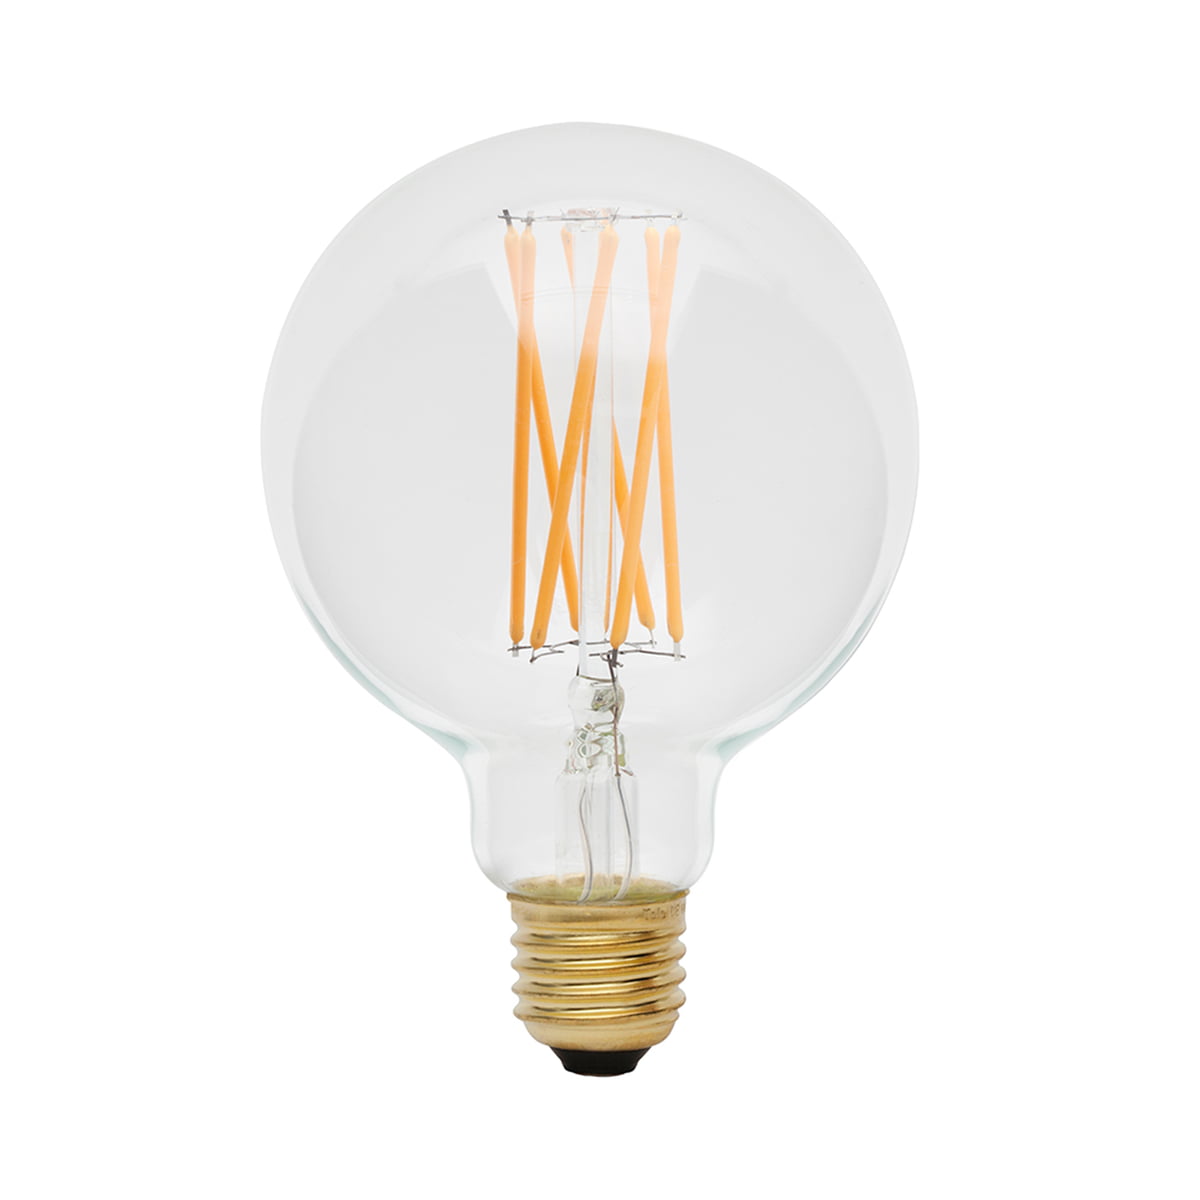 Oxide been Koninklijke familie Tala - Feature collection led lamps | Connox